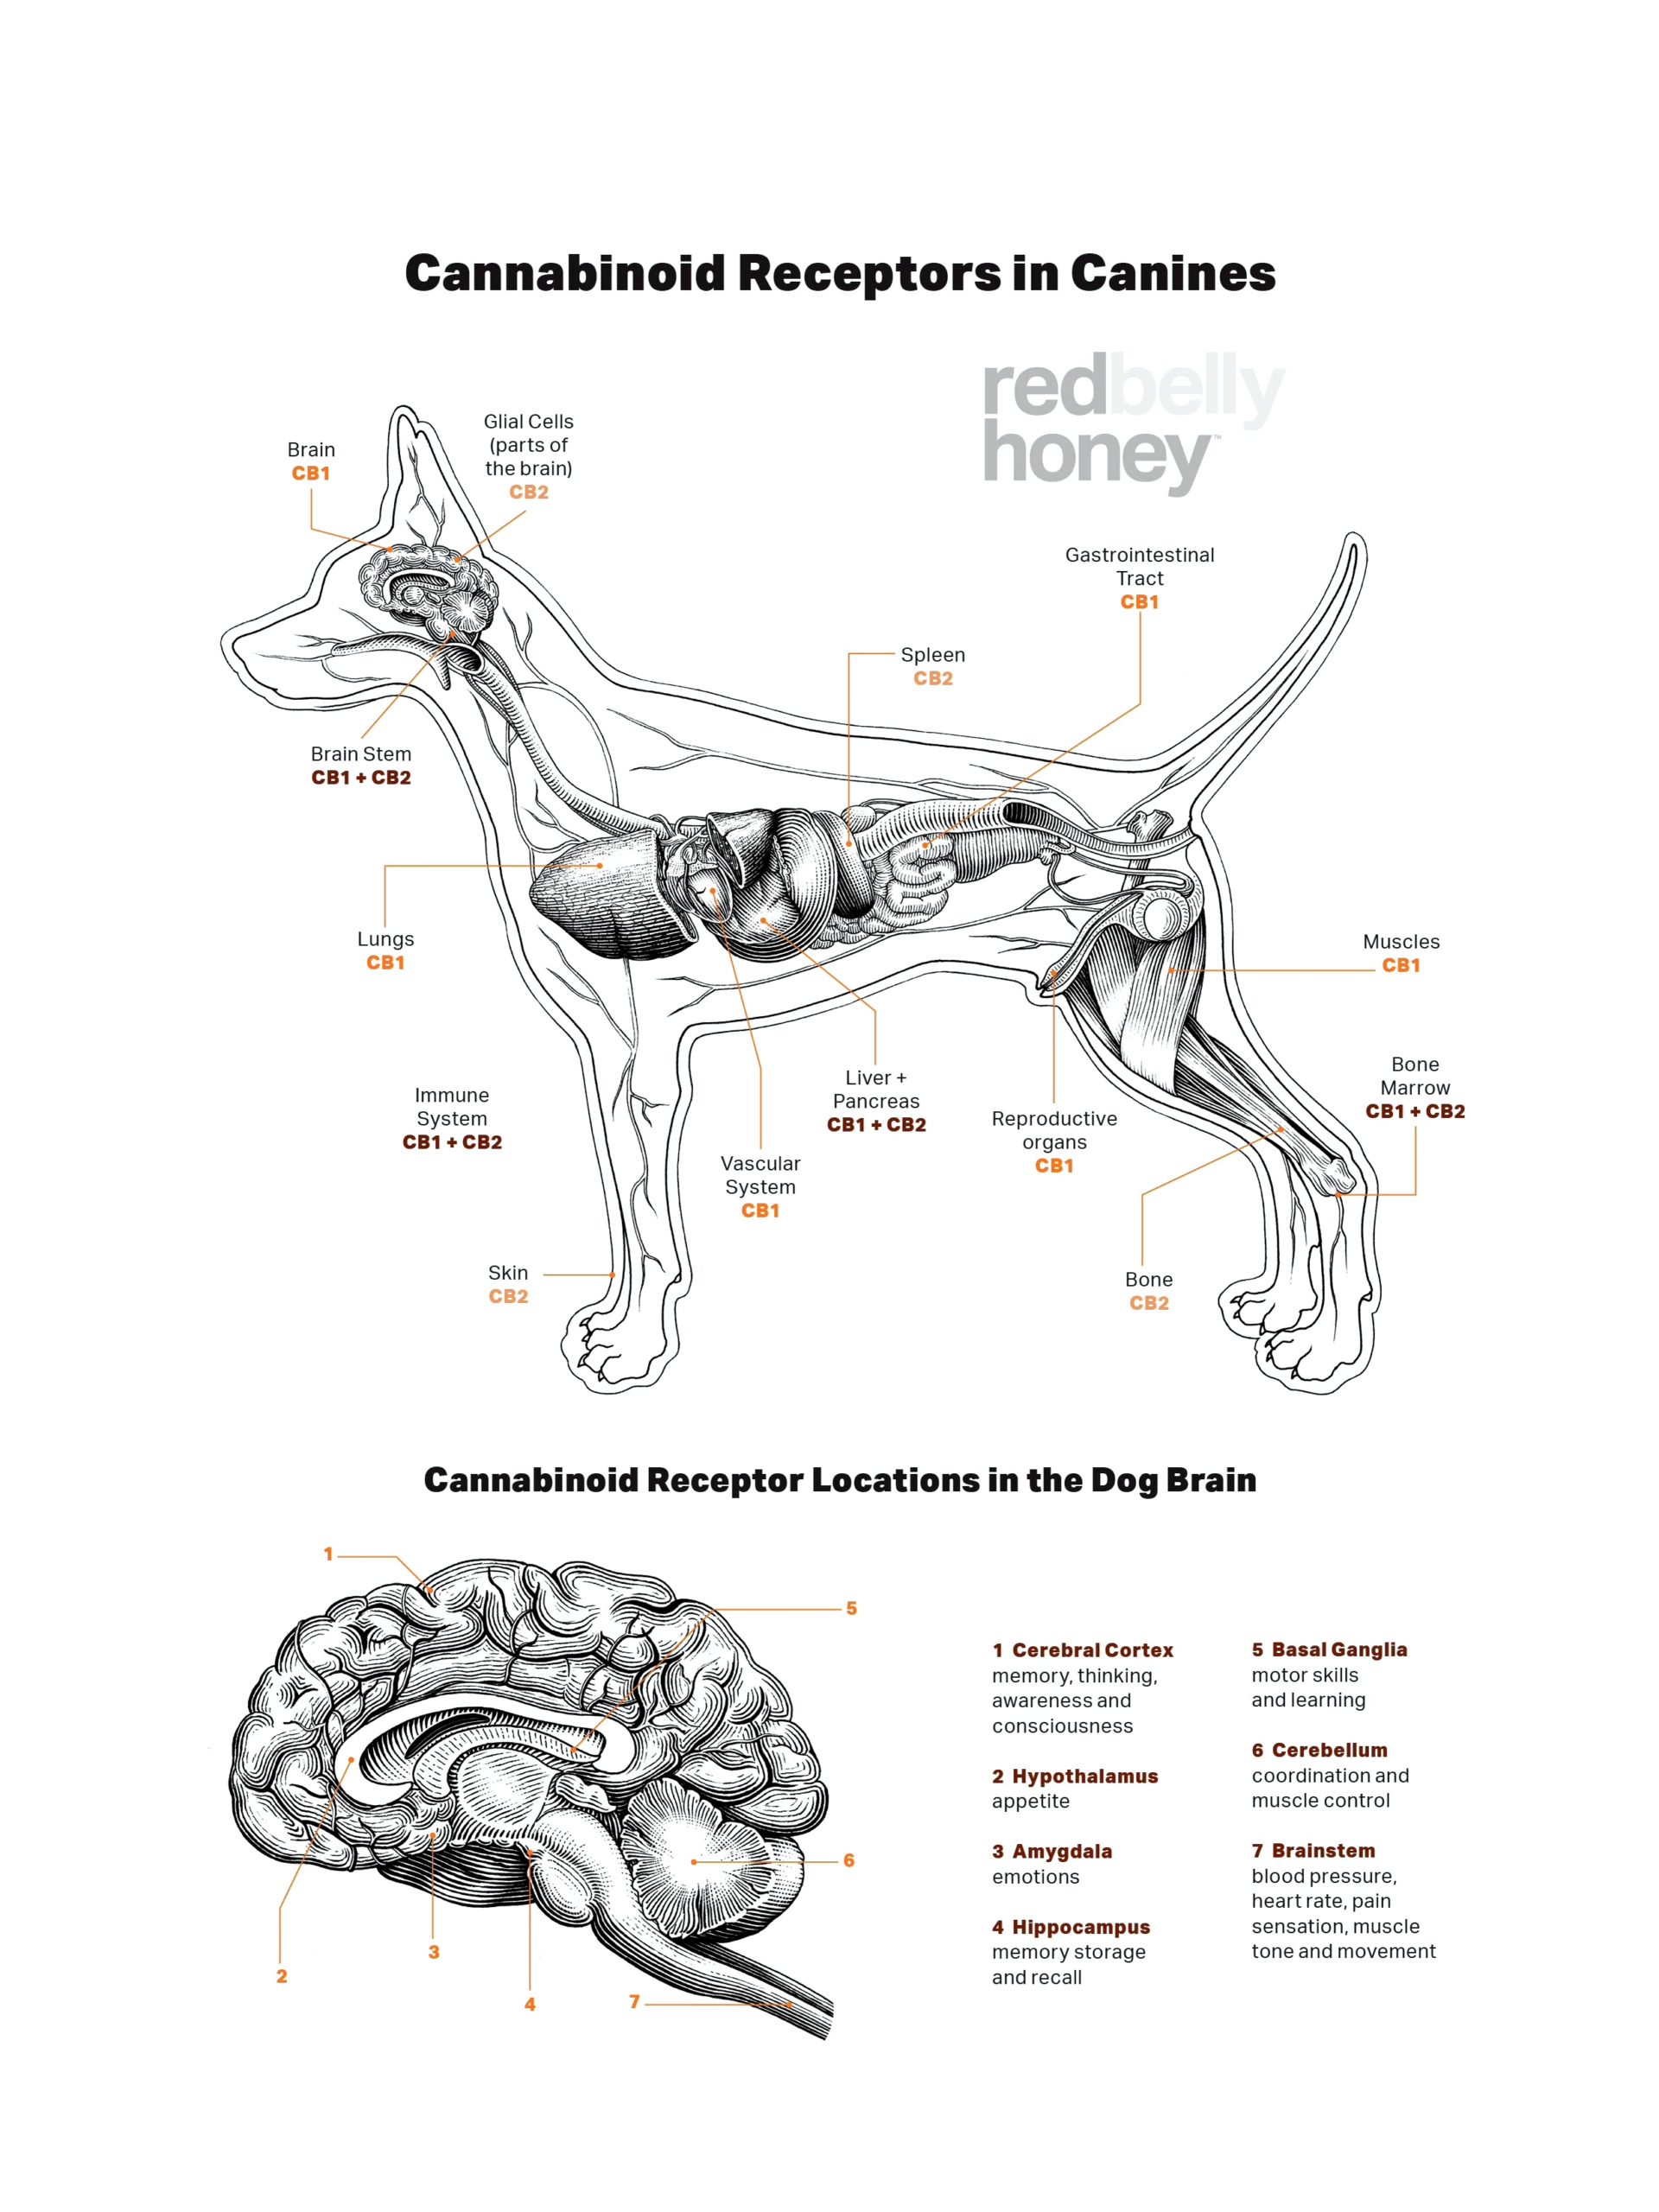 Cannabinoid Receptors in Canines